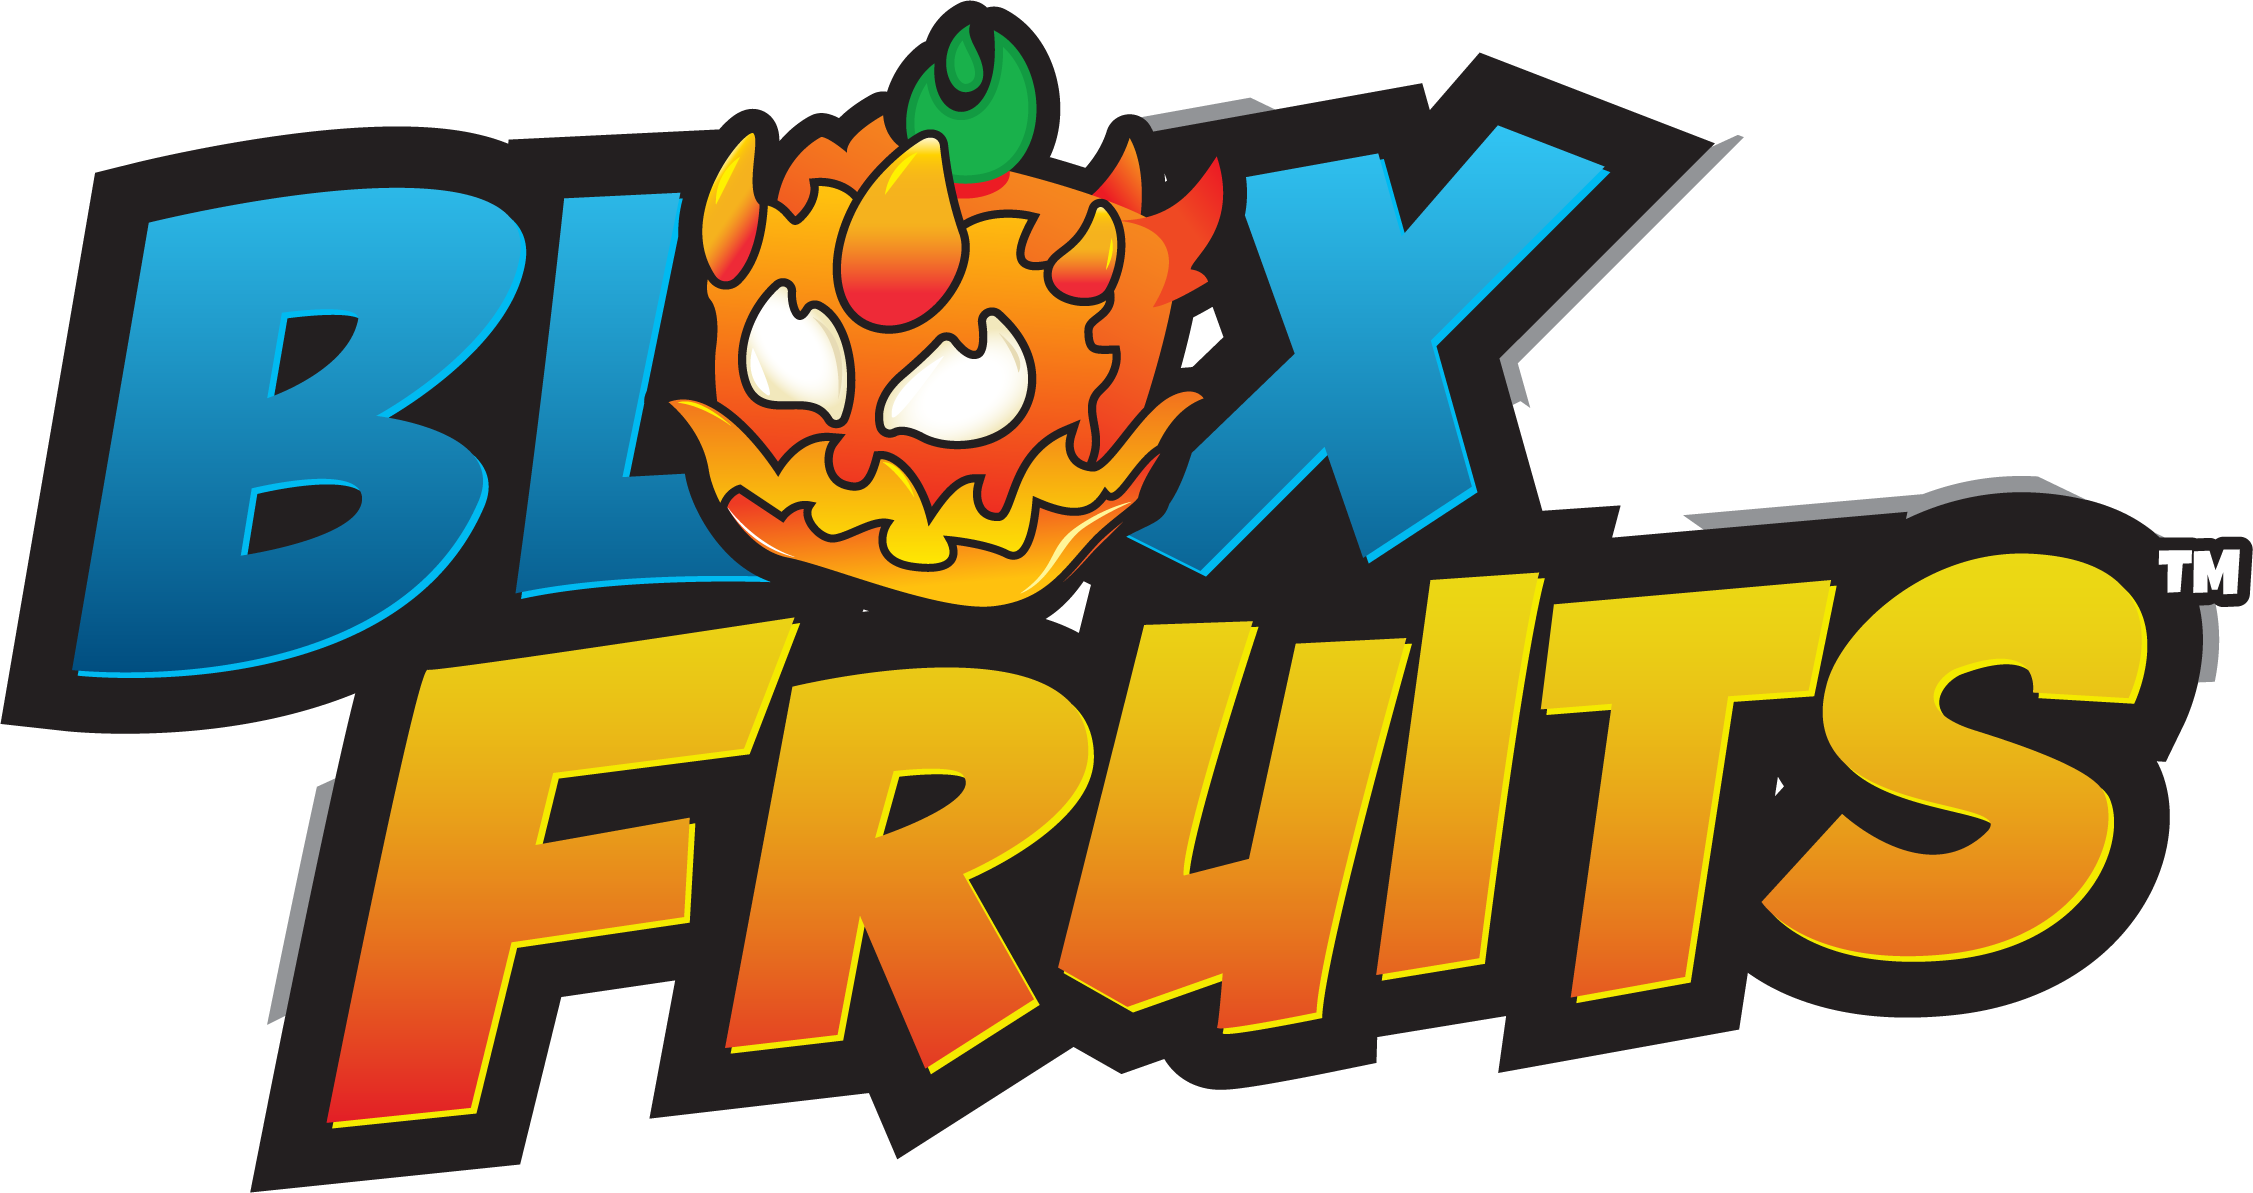 DLC – Blox Fruits